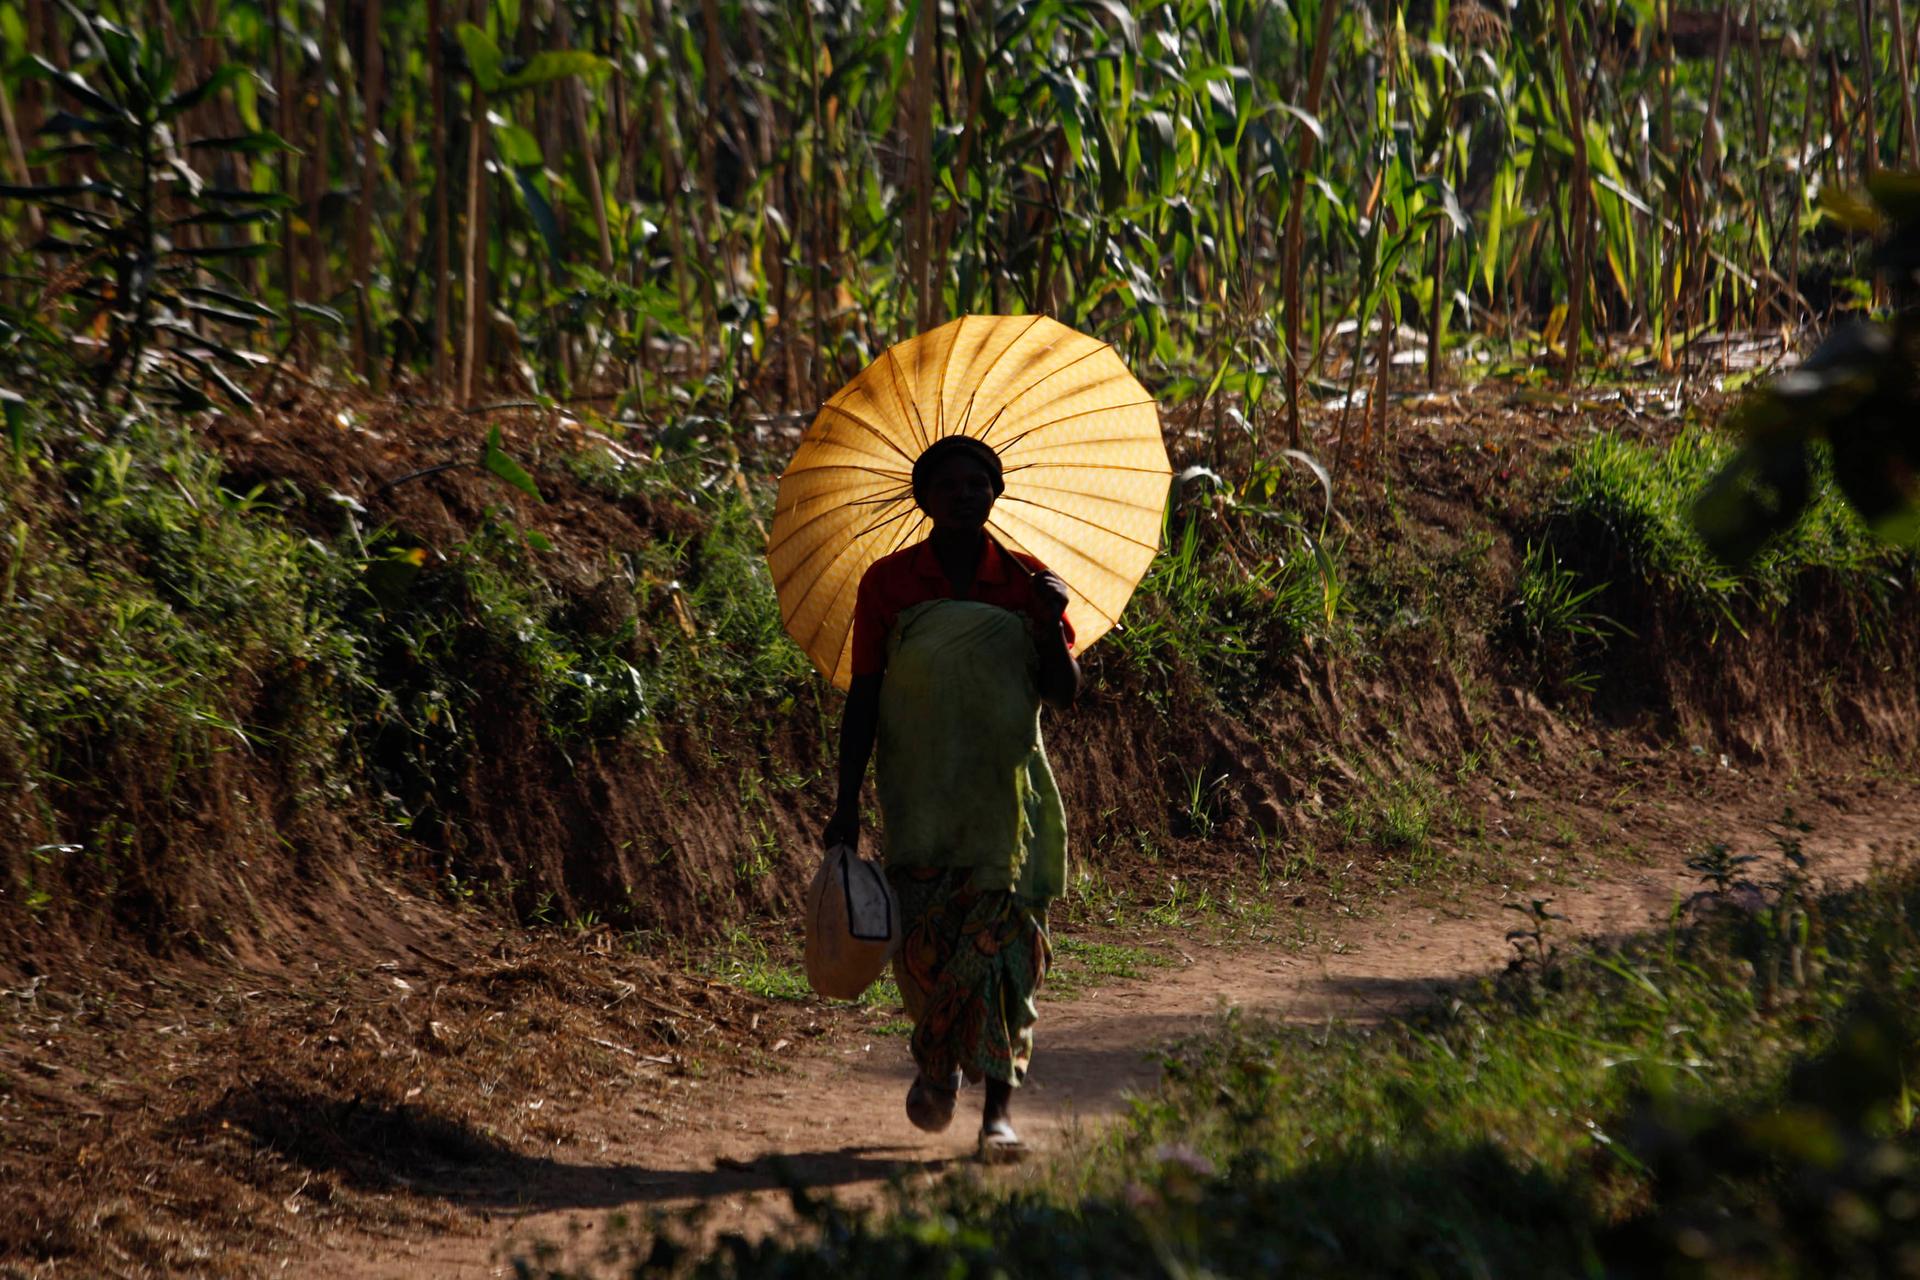 A Rwandan woman carries an umbrella for shade north of the capital Kigali.